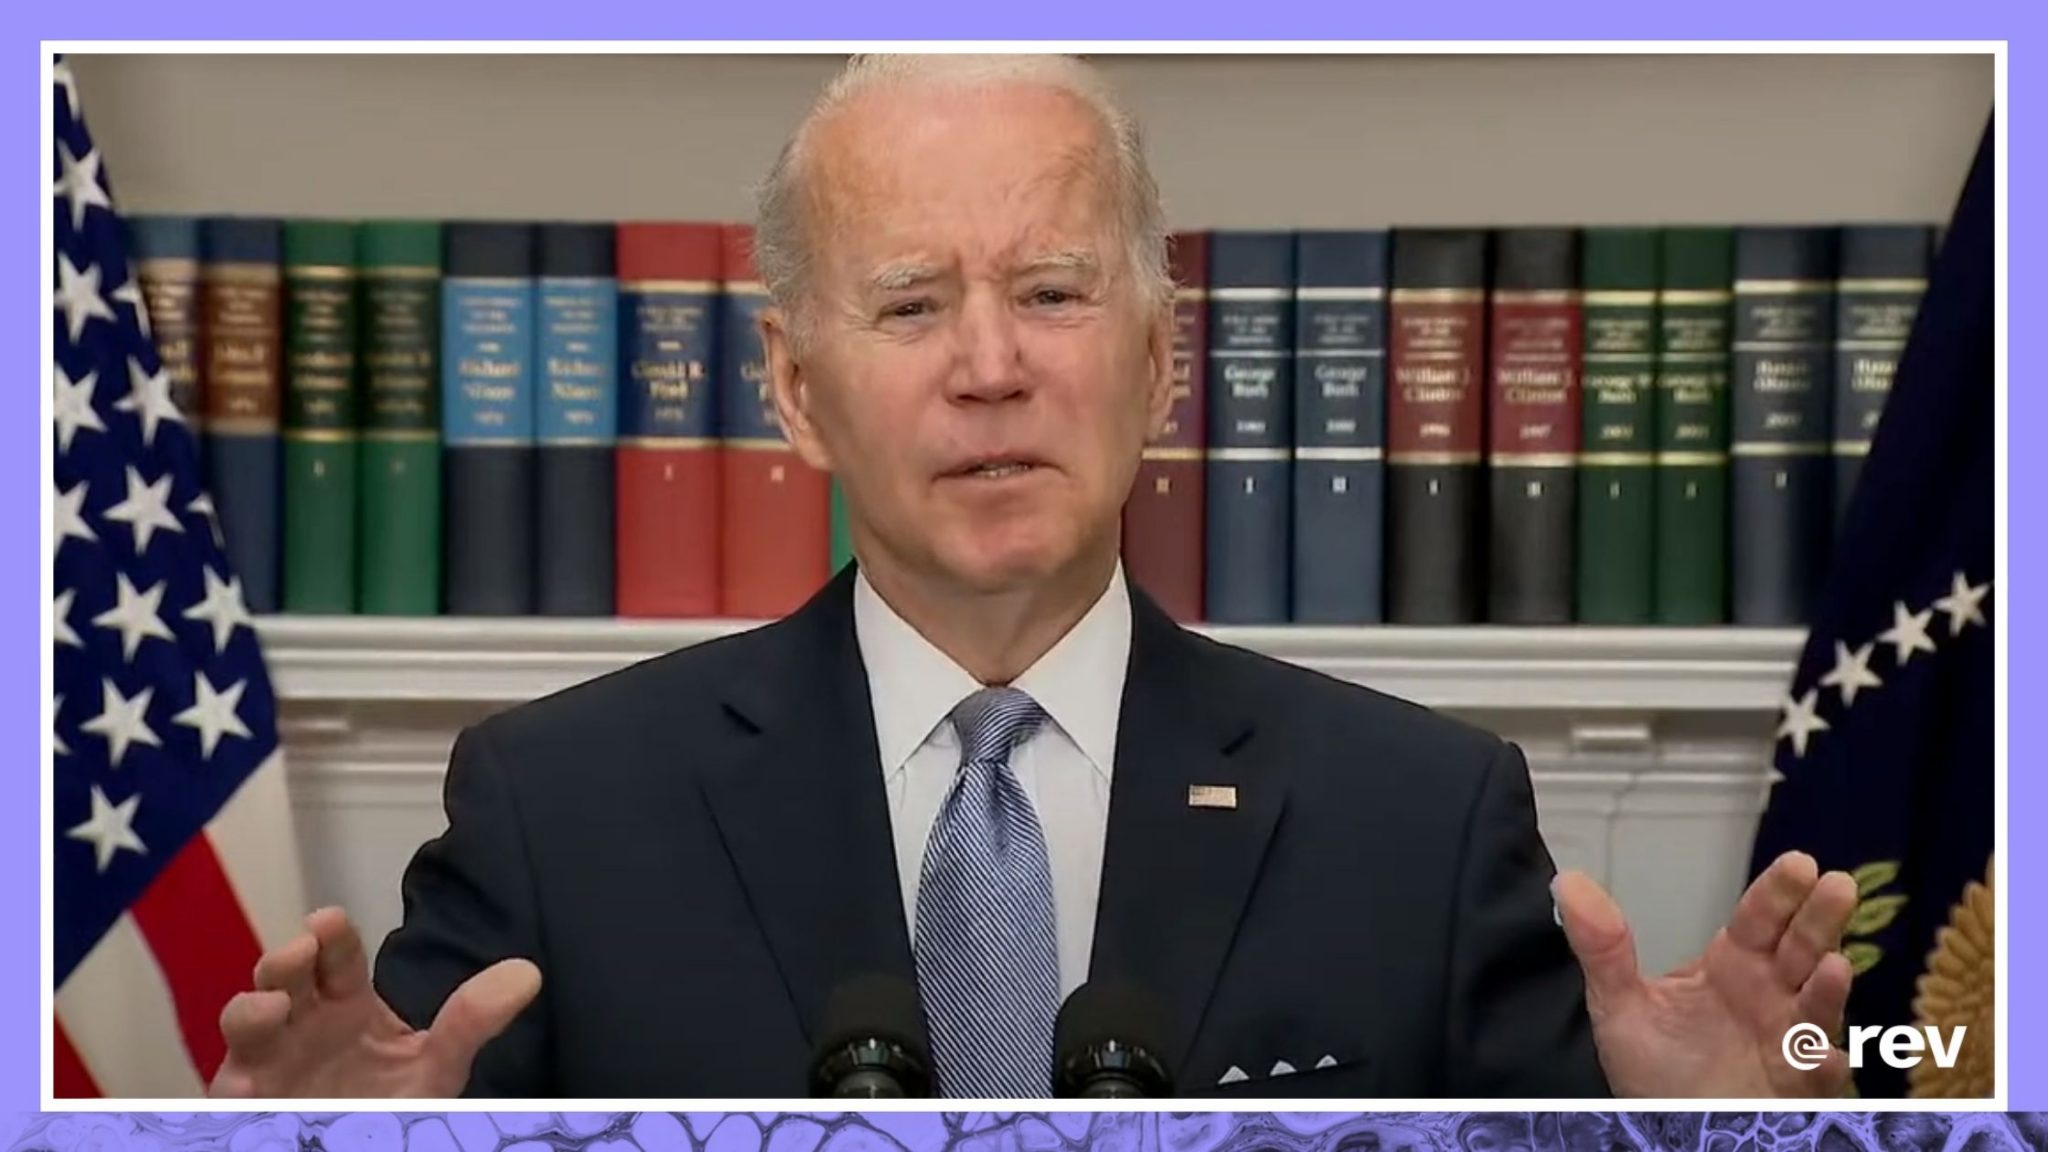 Biden announcing new military aid for Ukraine 4/21/22 Transcript